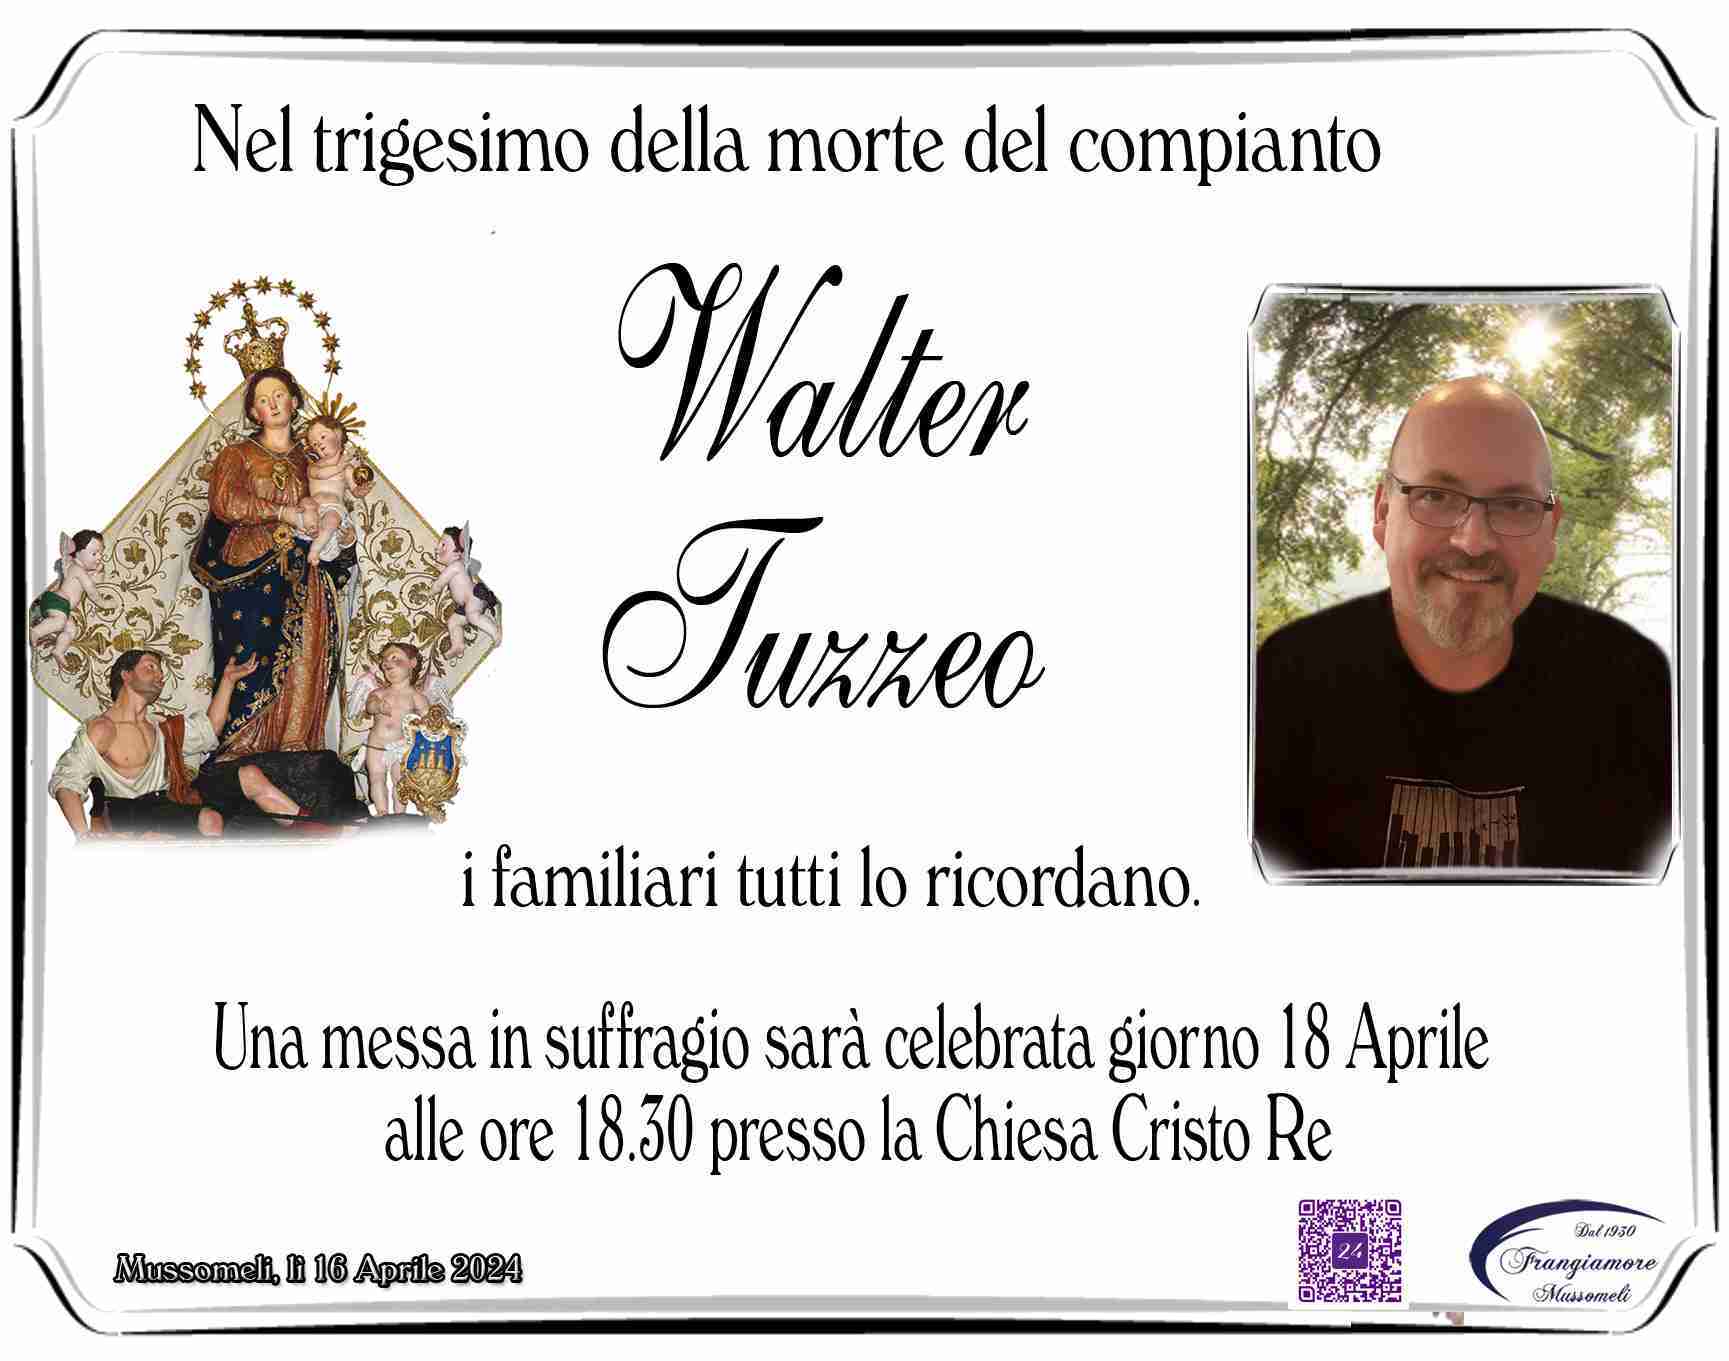 Walter Tuzzeo